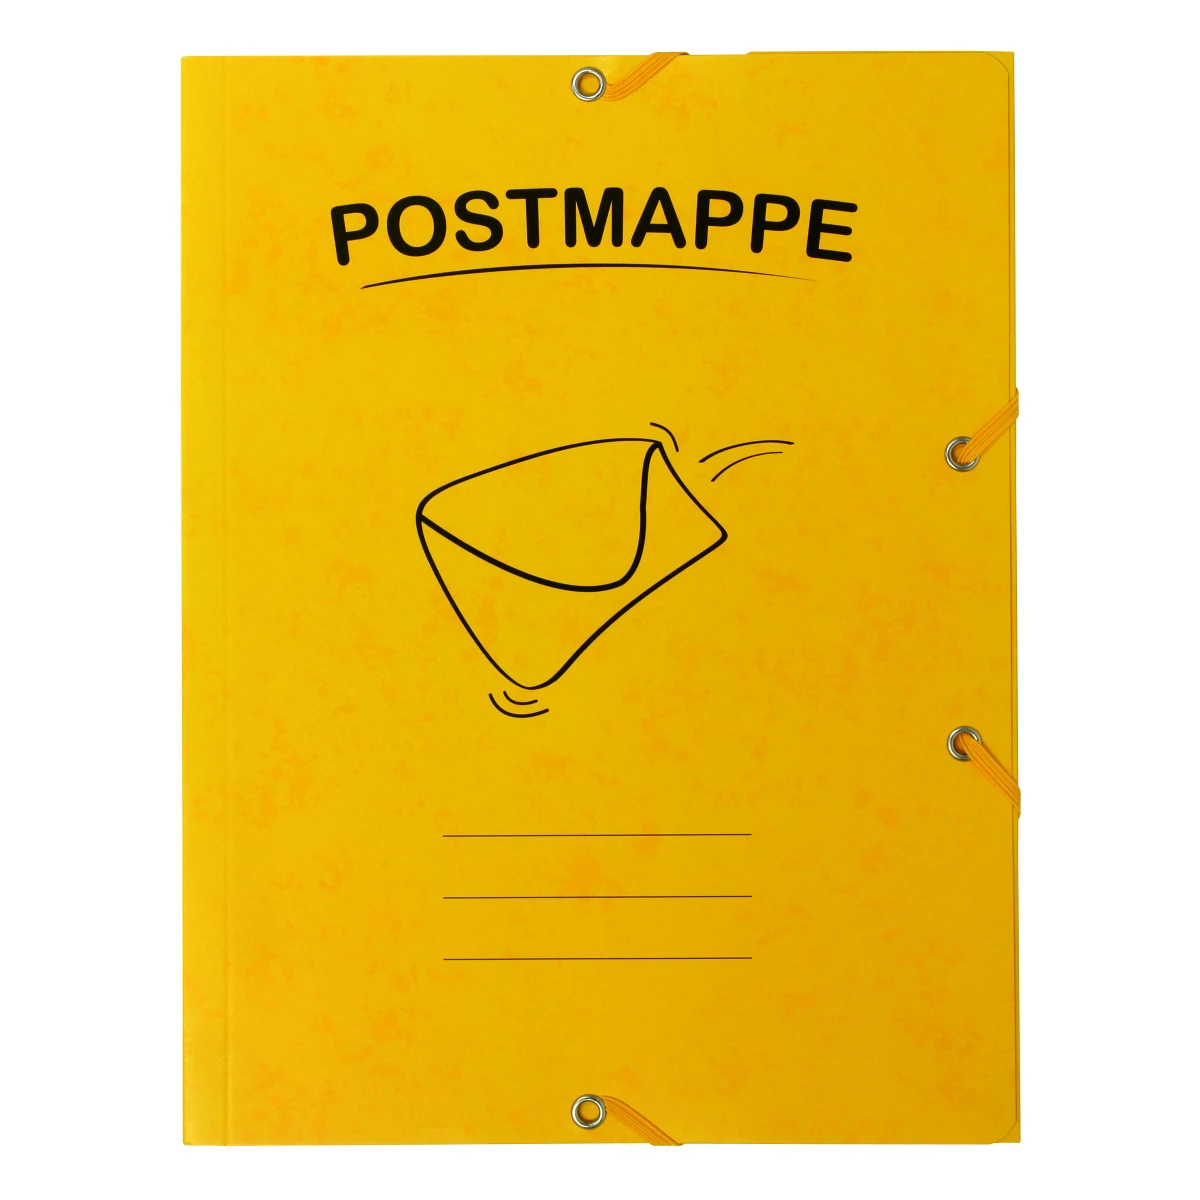 Postmappe, FSC